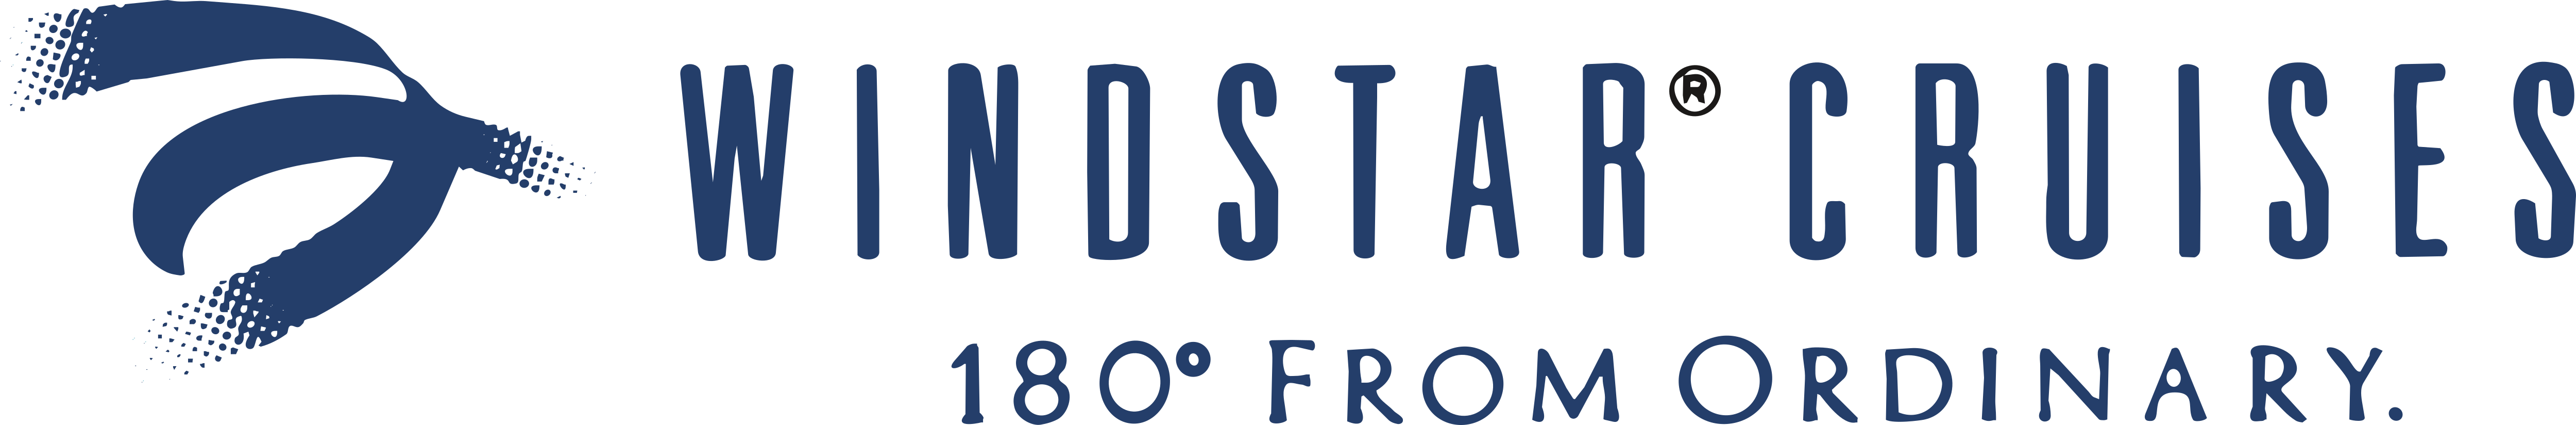 windstar cruises logo png